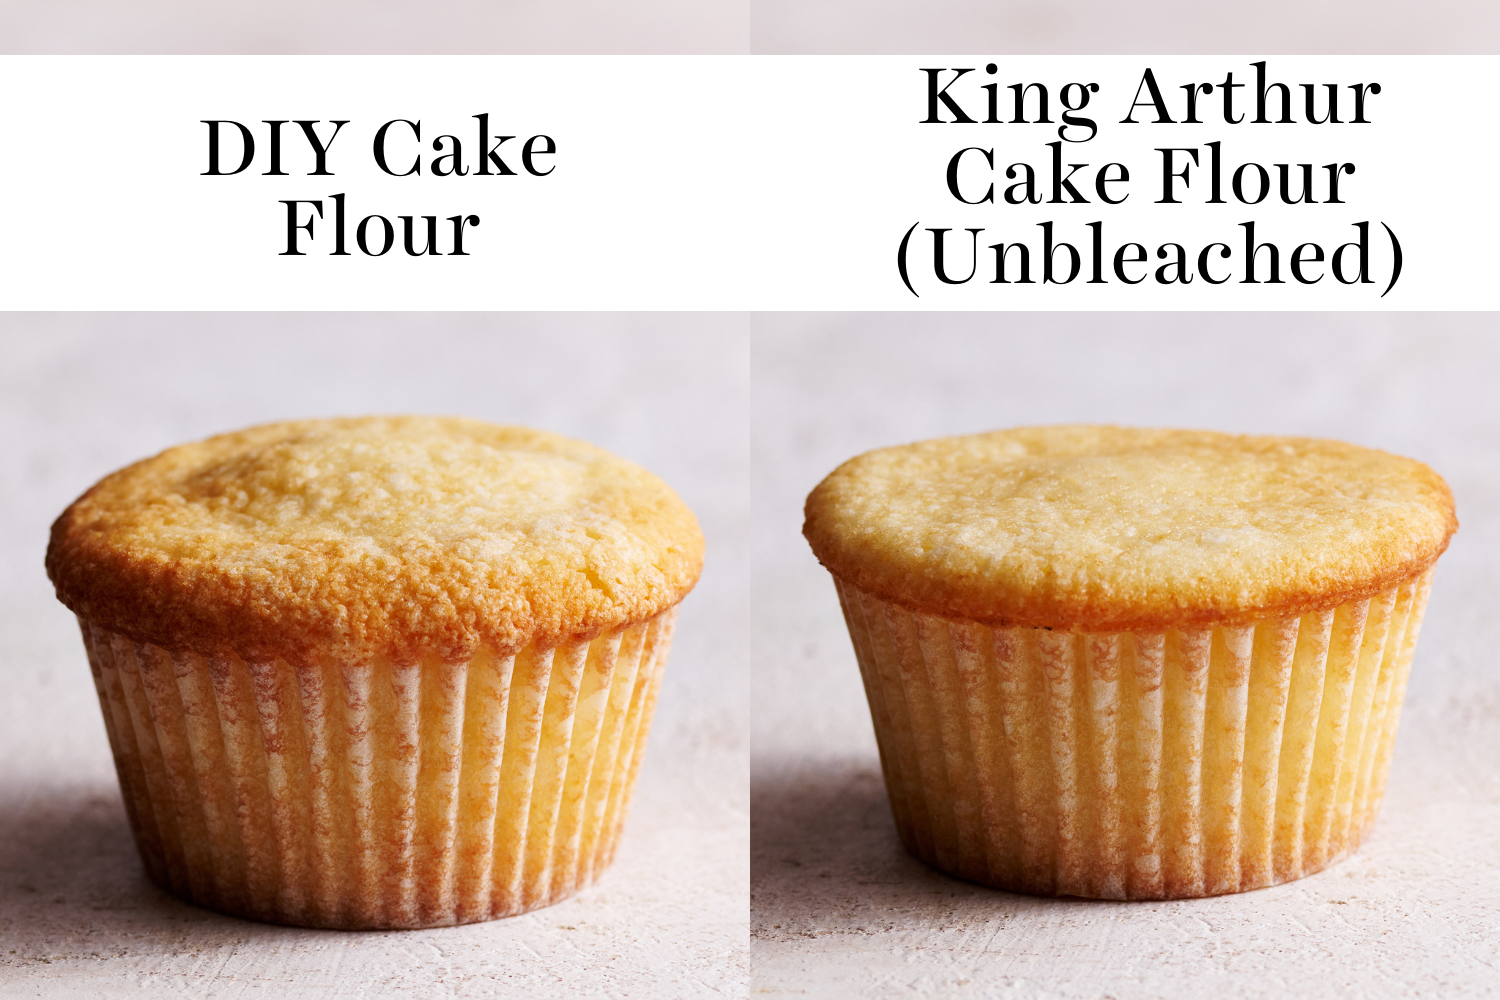 diy cake flour vs. king arthur brand cake flour cupcakes side by side.